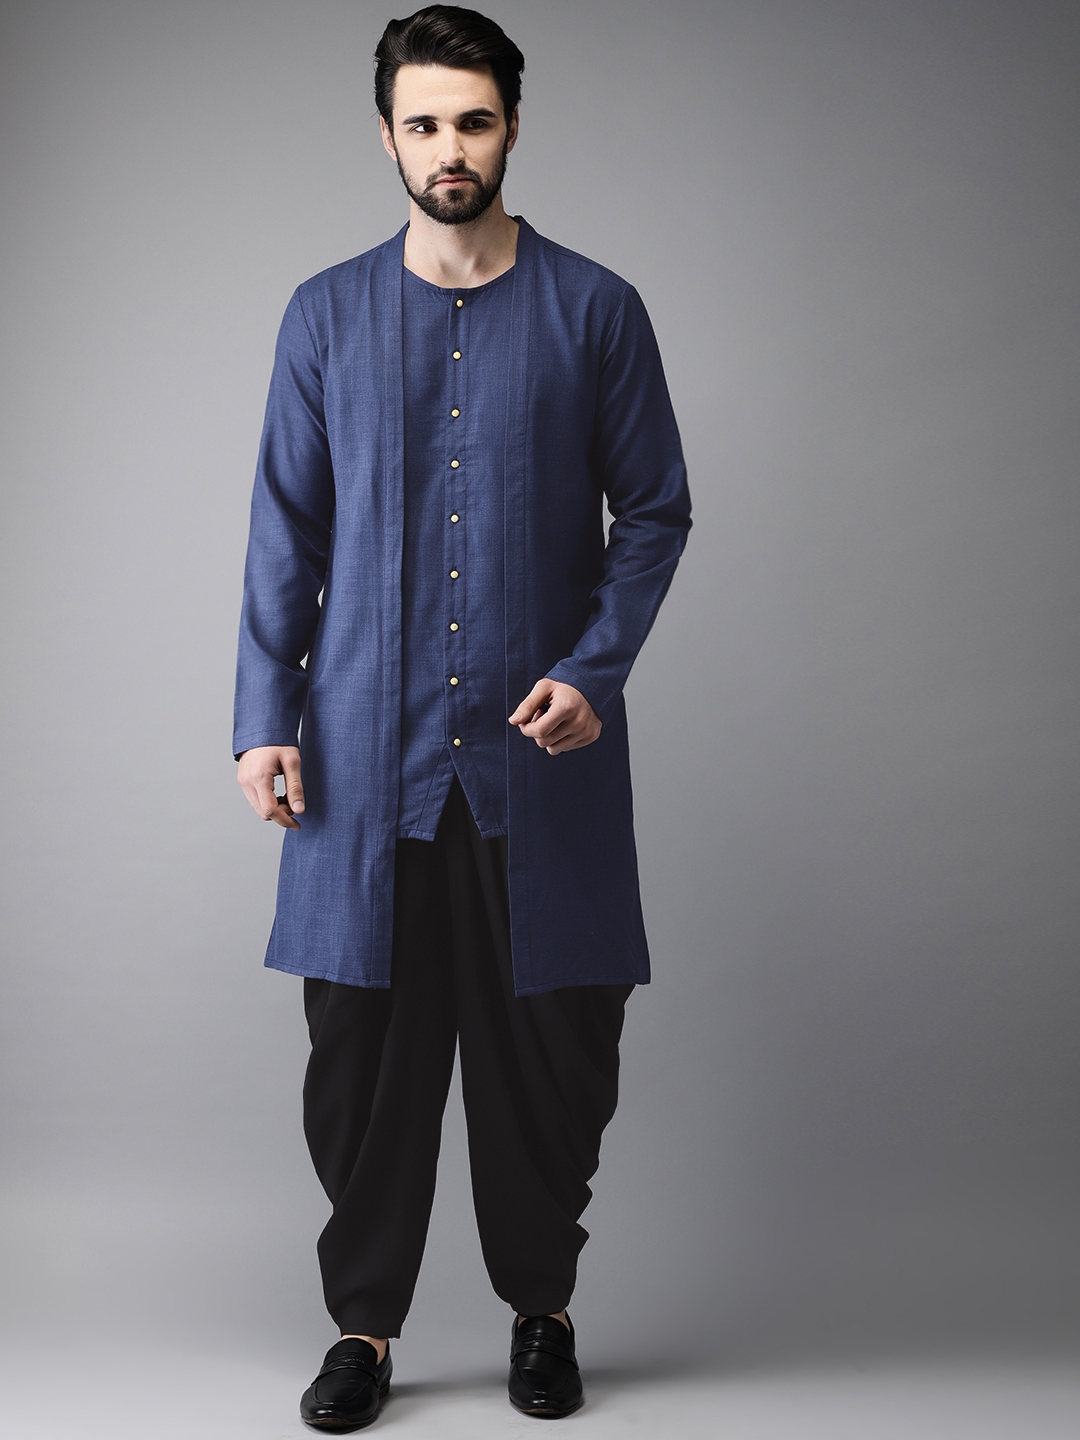 Buy Kurta Pajamas For Men Online At Best Prices In India - Tasva